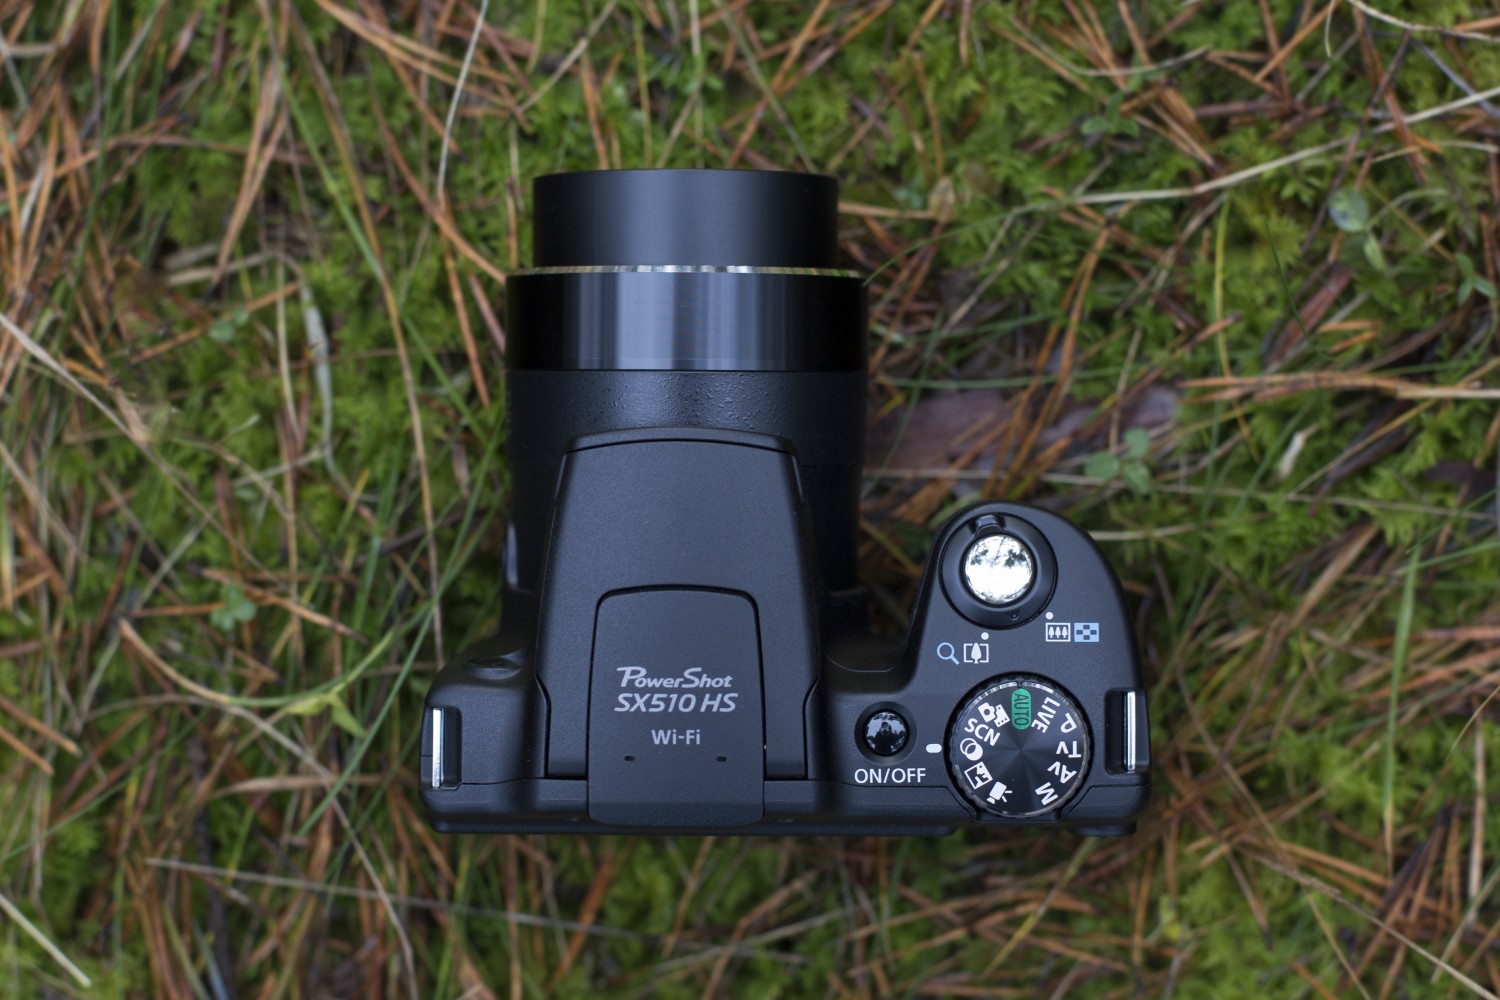 Canon Powershot sx510